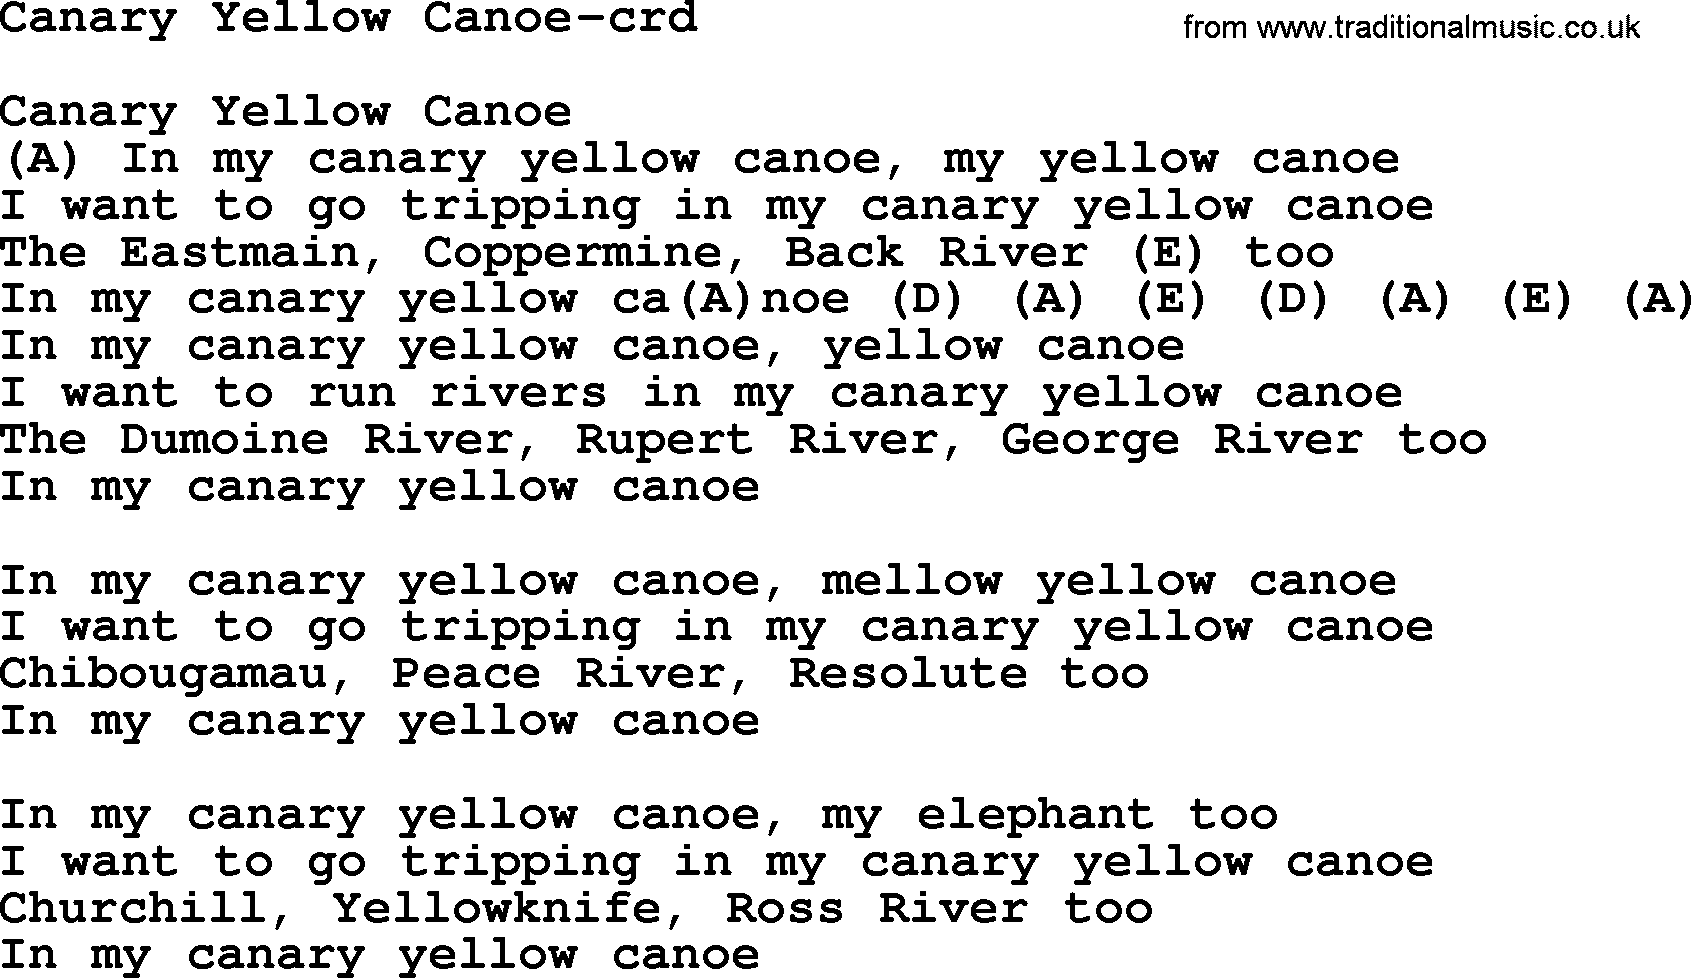 Gordon Lightfoot song Canary Yellow Canoe, lyrics and chords